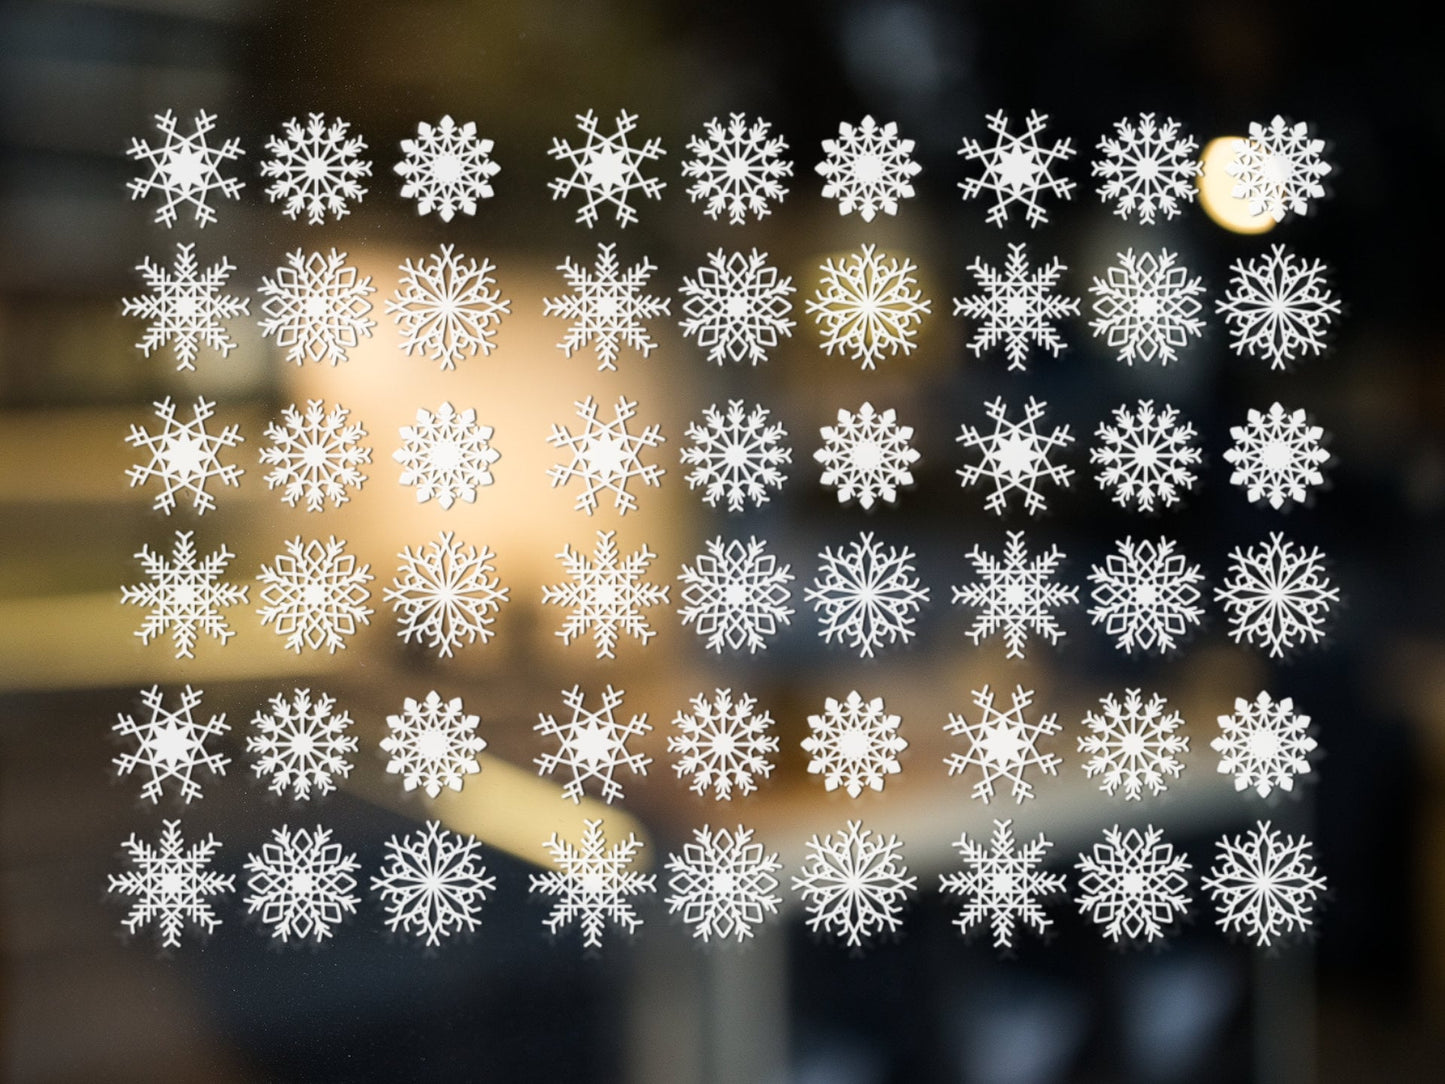 Shop Window Christmas Snowflake Window Stickers, Shop Display Christmas Decals, Snowflake Stickers For Shops